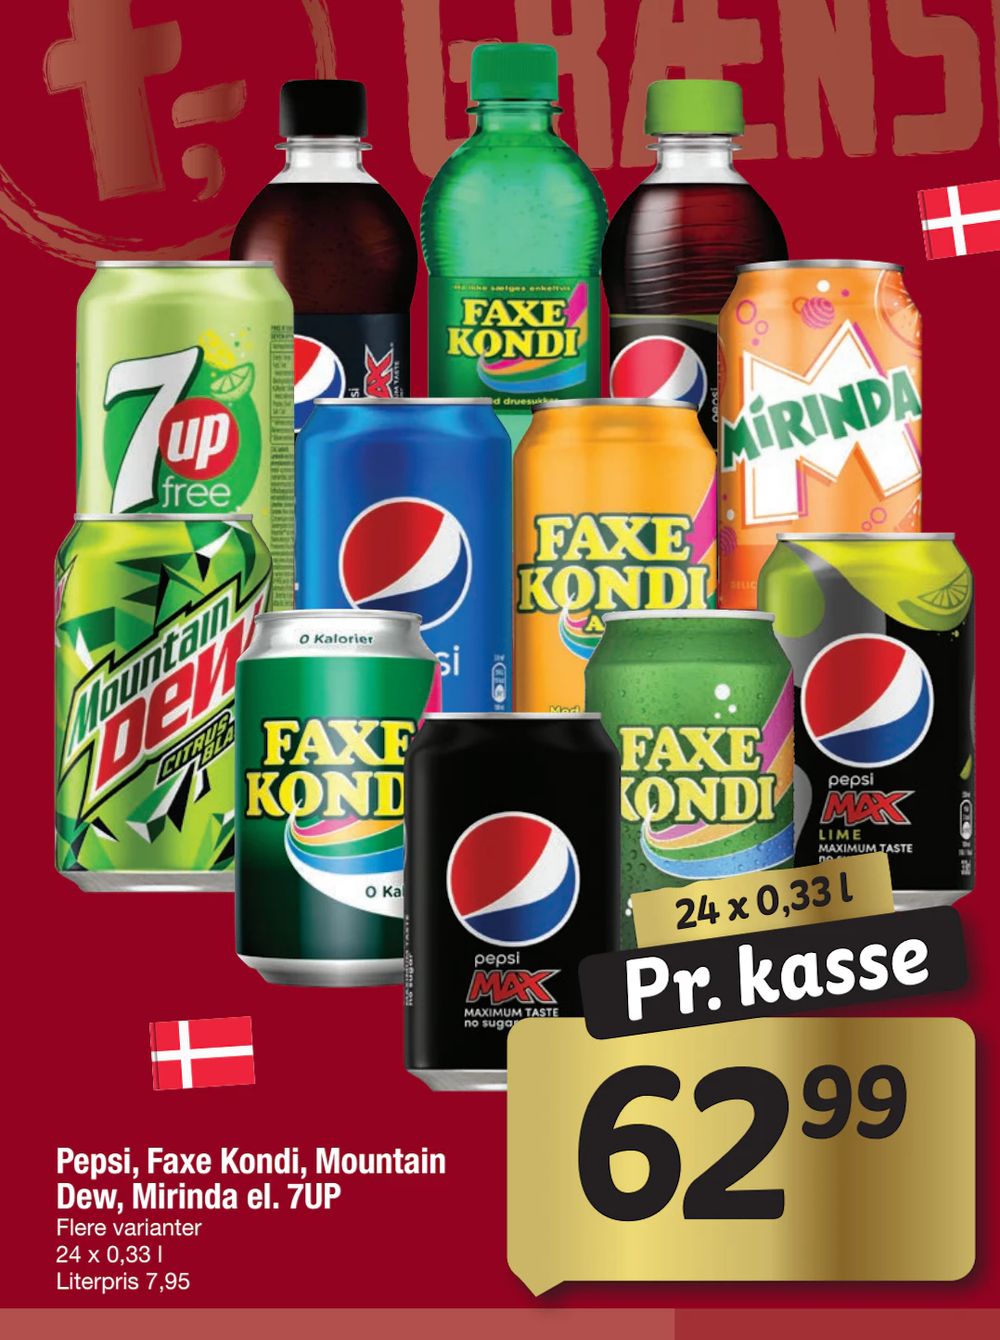 Tilbud på Pepsi, Faxe Kondi, Mountain Dew, Mirinda el. 7UP fra fakta Tyskland til 62,99 kr.